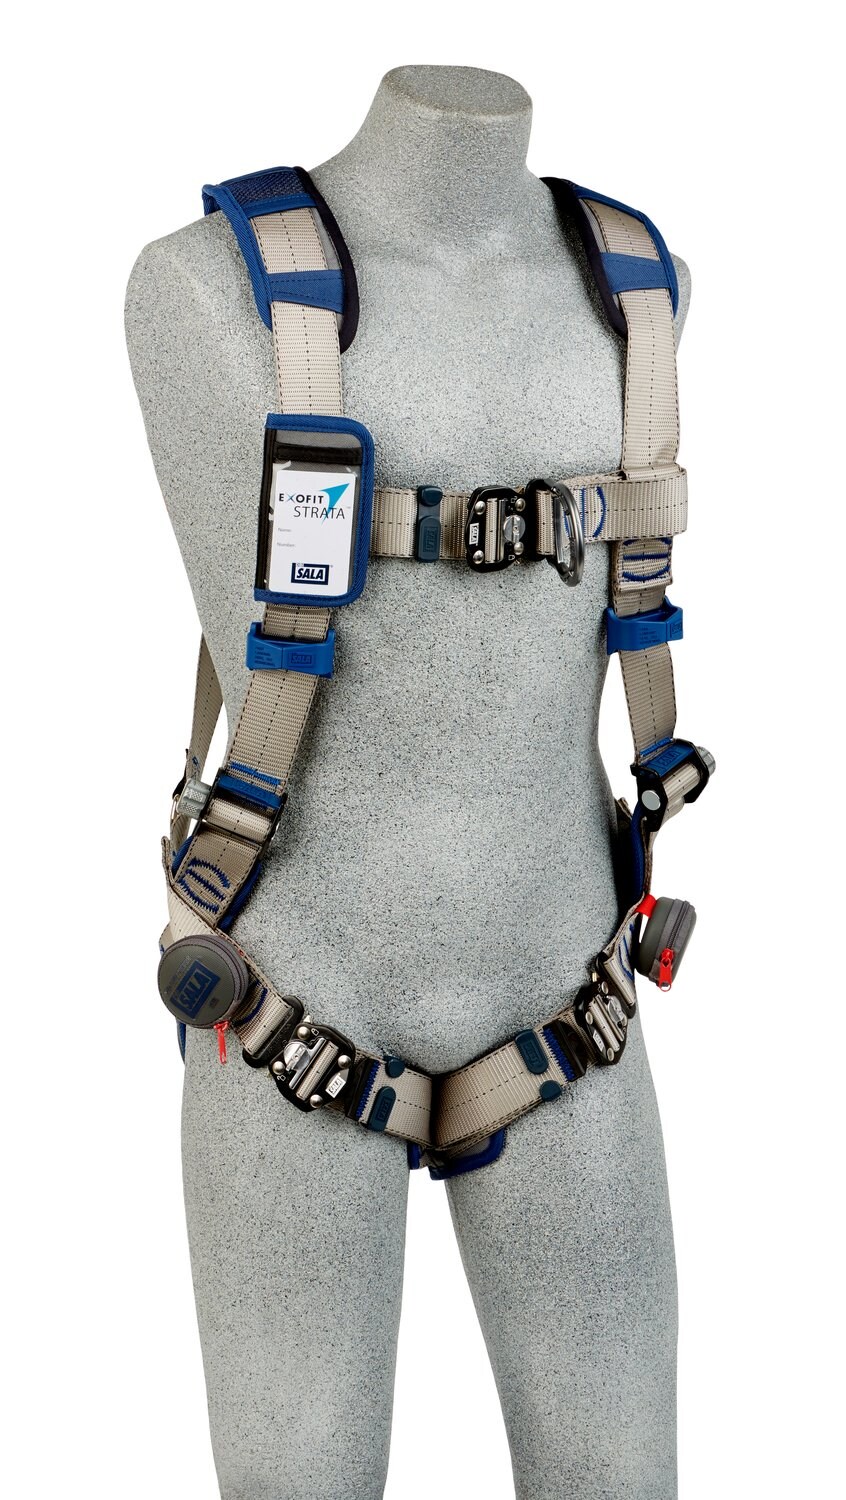 7012815966 - 3M DBI-SALA ExoFit STRATA Comfort Vest Climbing Safety Harness 1112507, Large